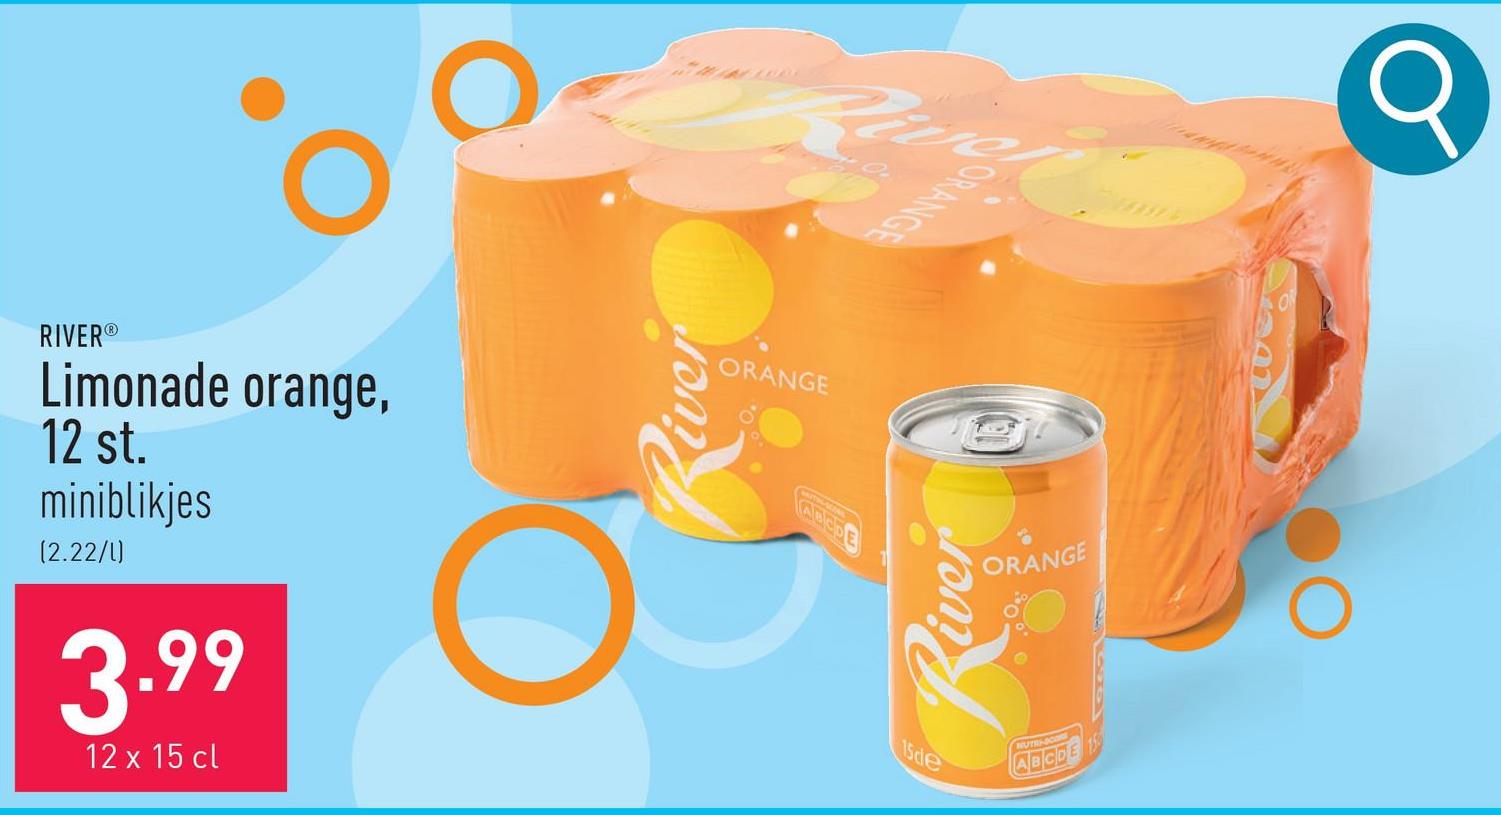 RIVER®
Limonade orange,
12 st.
miniblikjes
(2.22/1)
ORANGE
ADOR
BCDE
3.99
12 x 15 cl
15de
ORANGE
NUTRI-SCORE
ABCDE 1